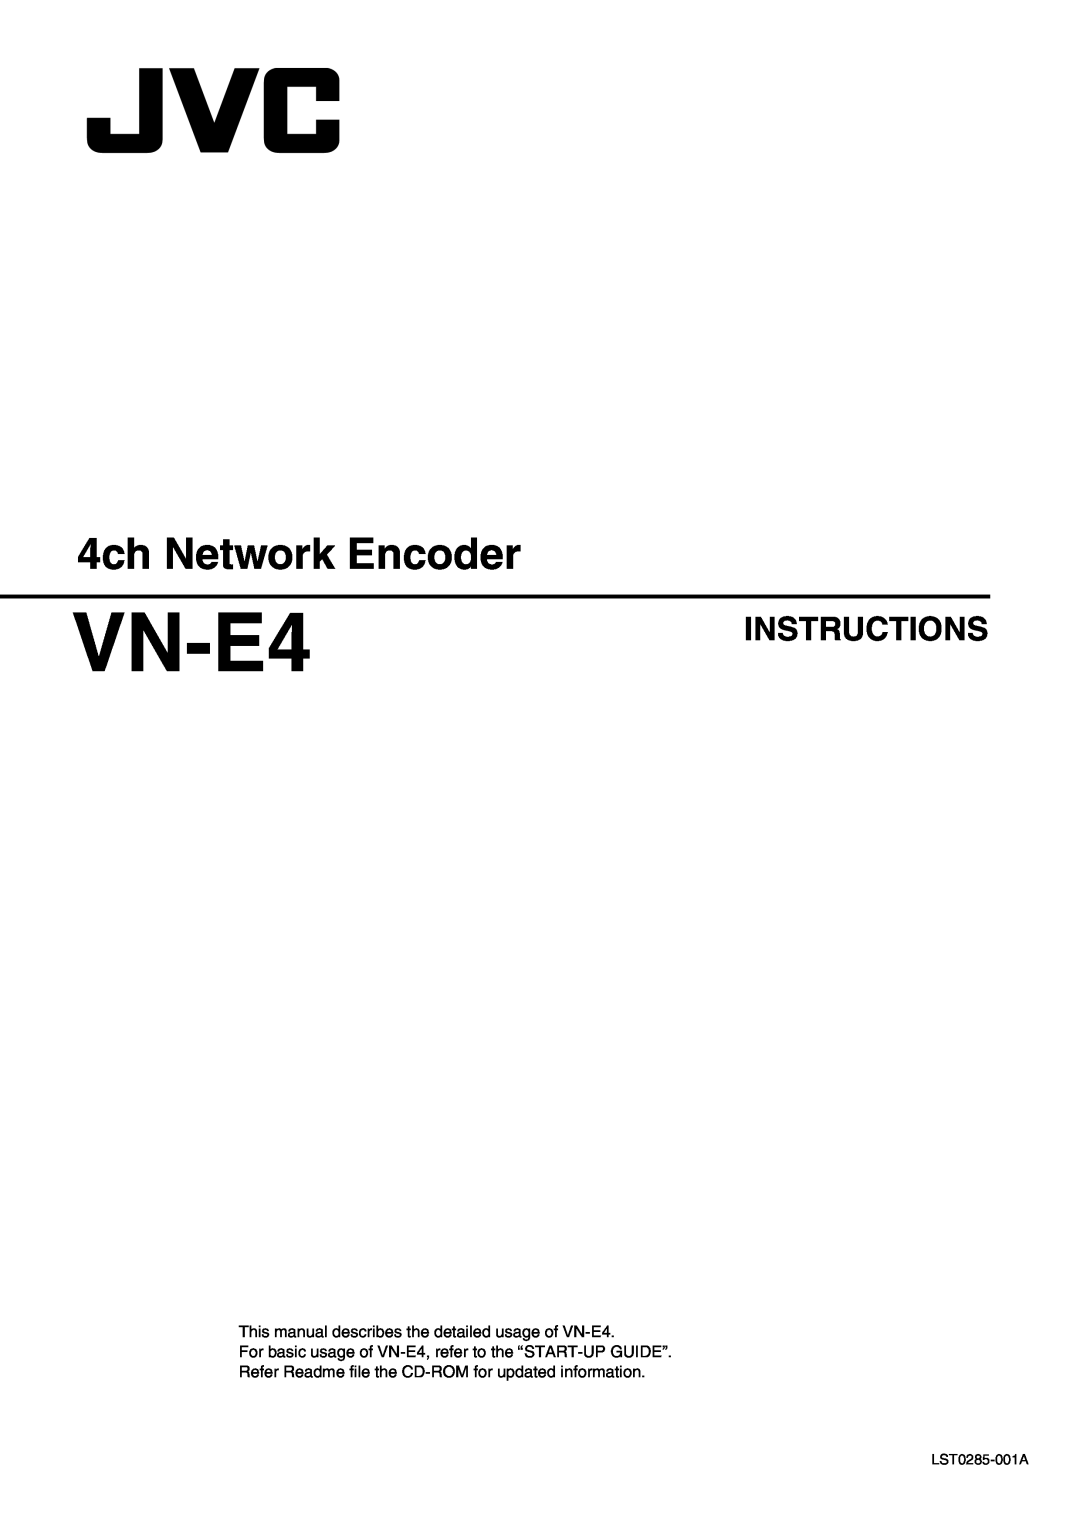 JVC VN-E4 manual 4ch Network Encoder, Instructions 